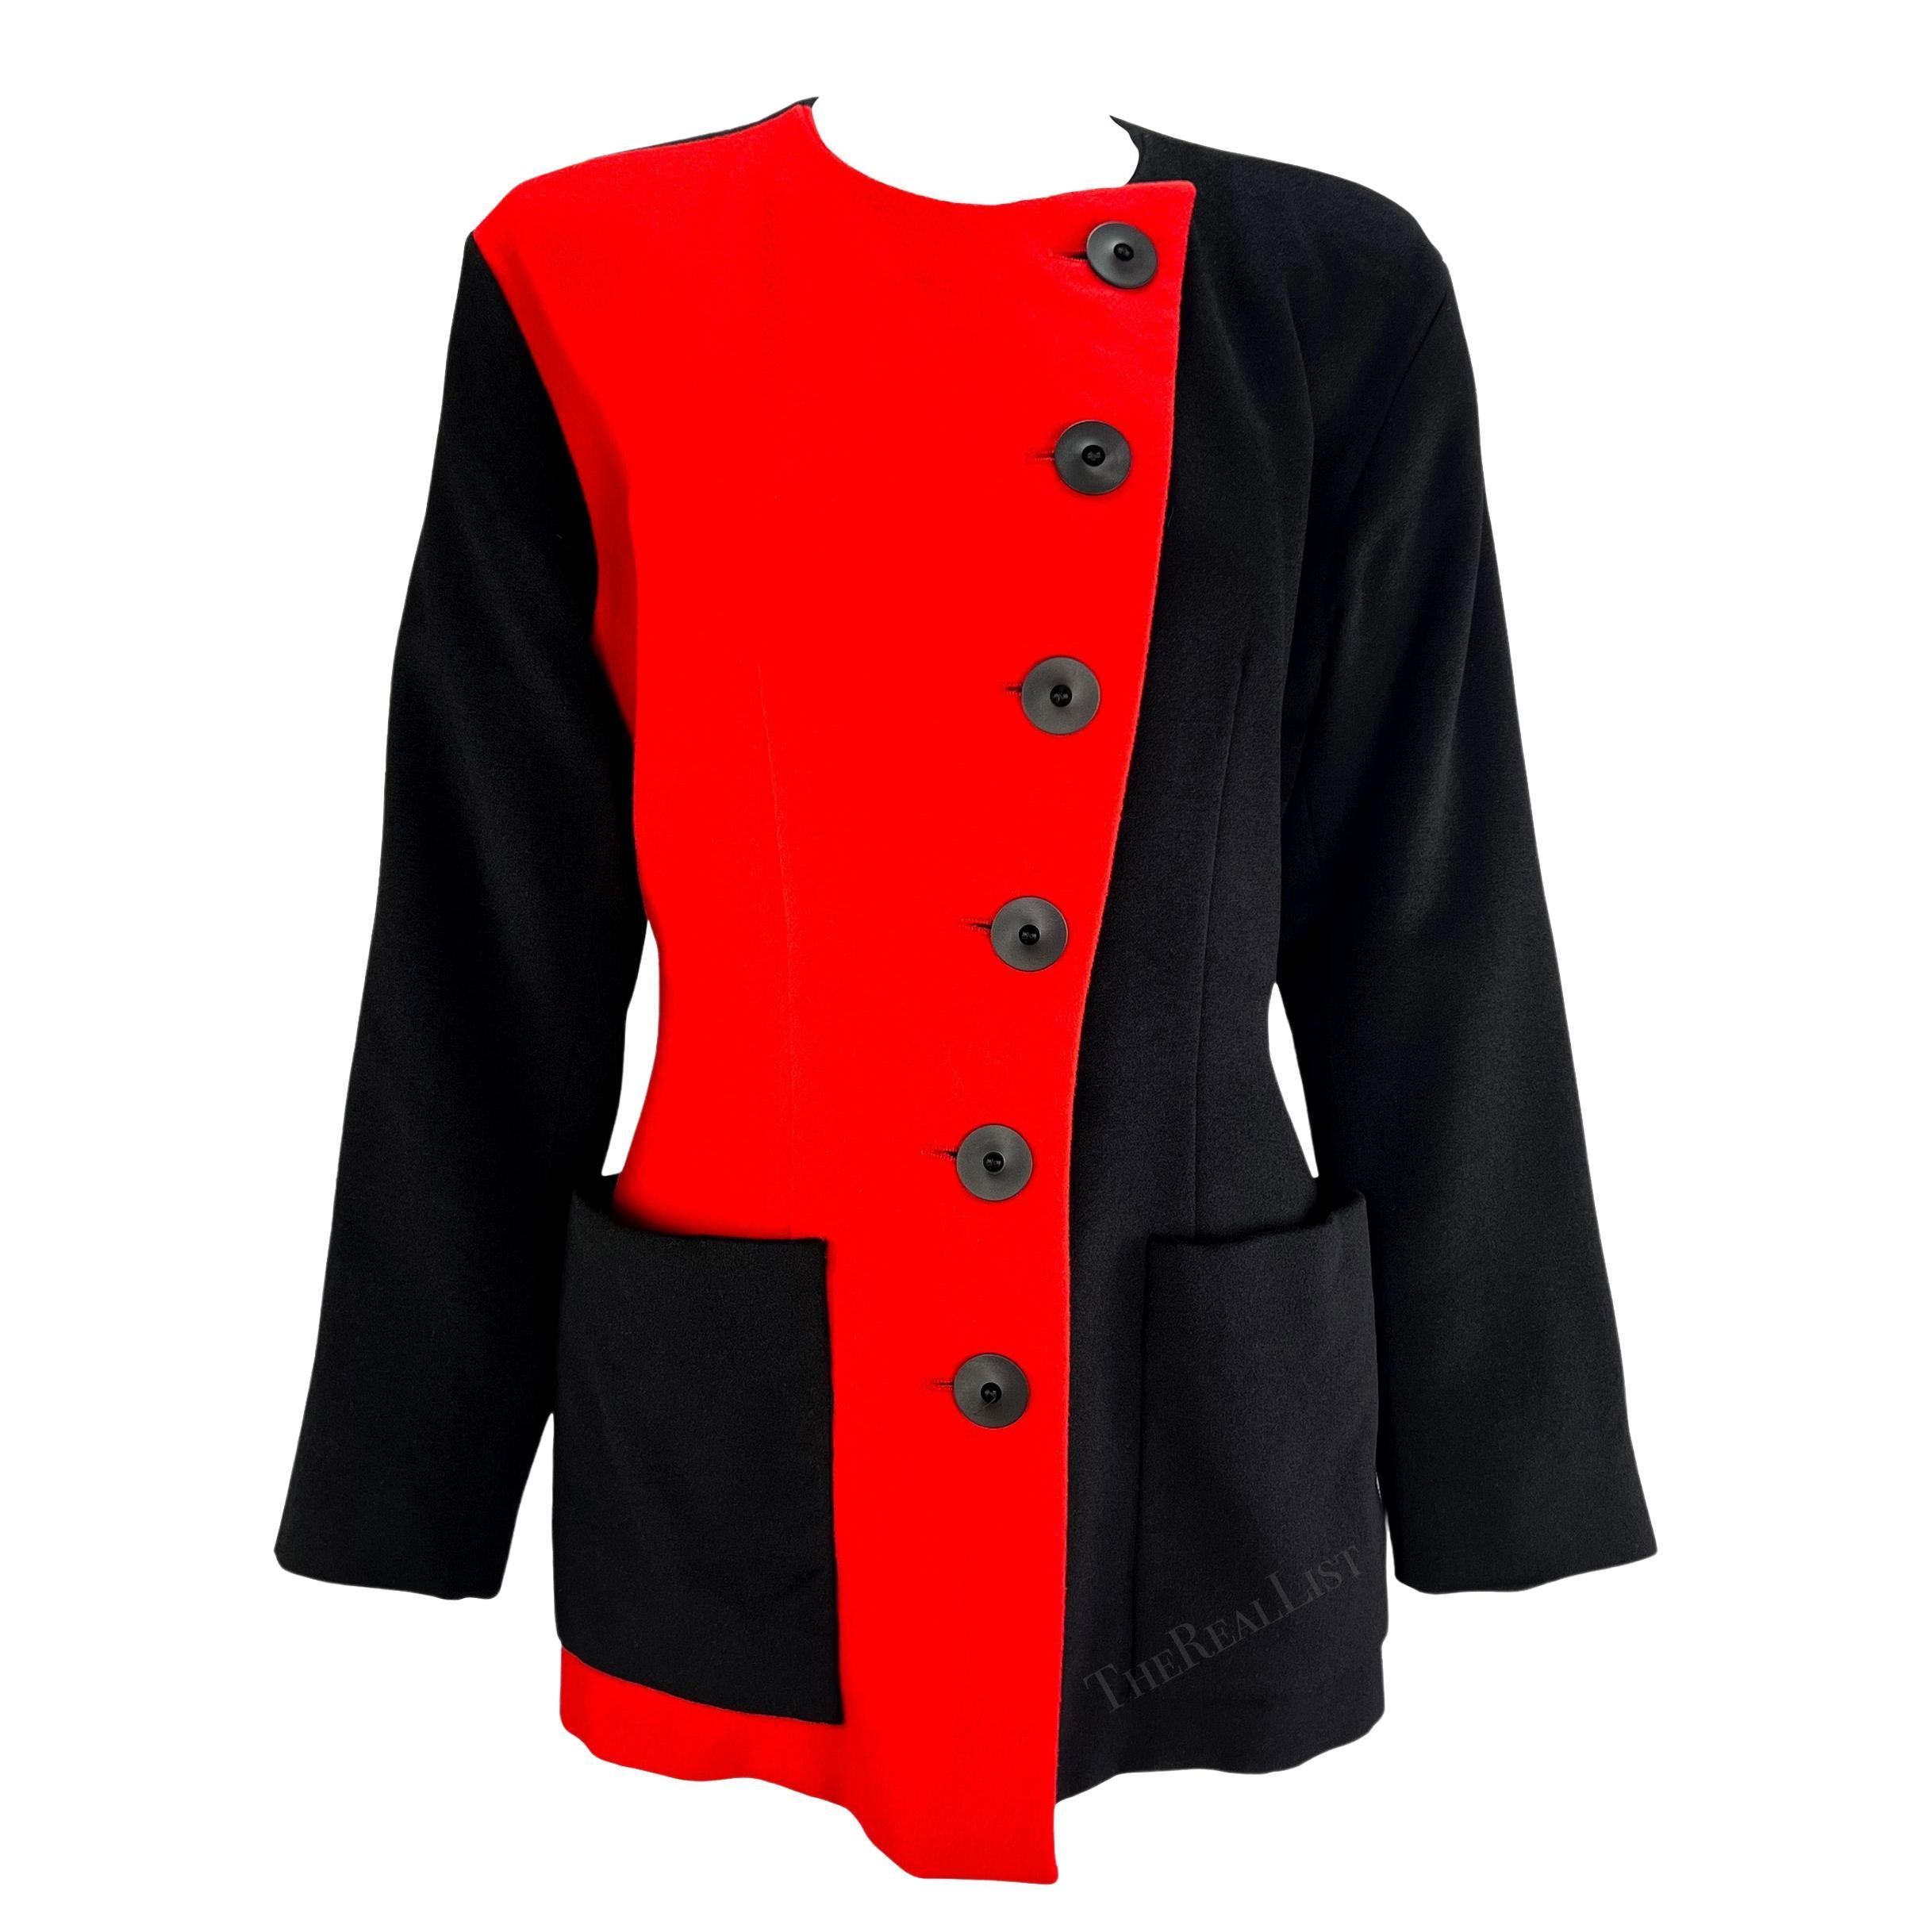 S/S 1992 Yves Saint Laurent Red Color-Block Black Mini Coat Dress Blazer Jacket For Sale